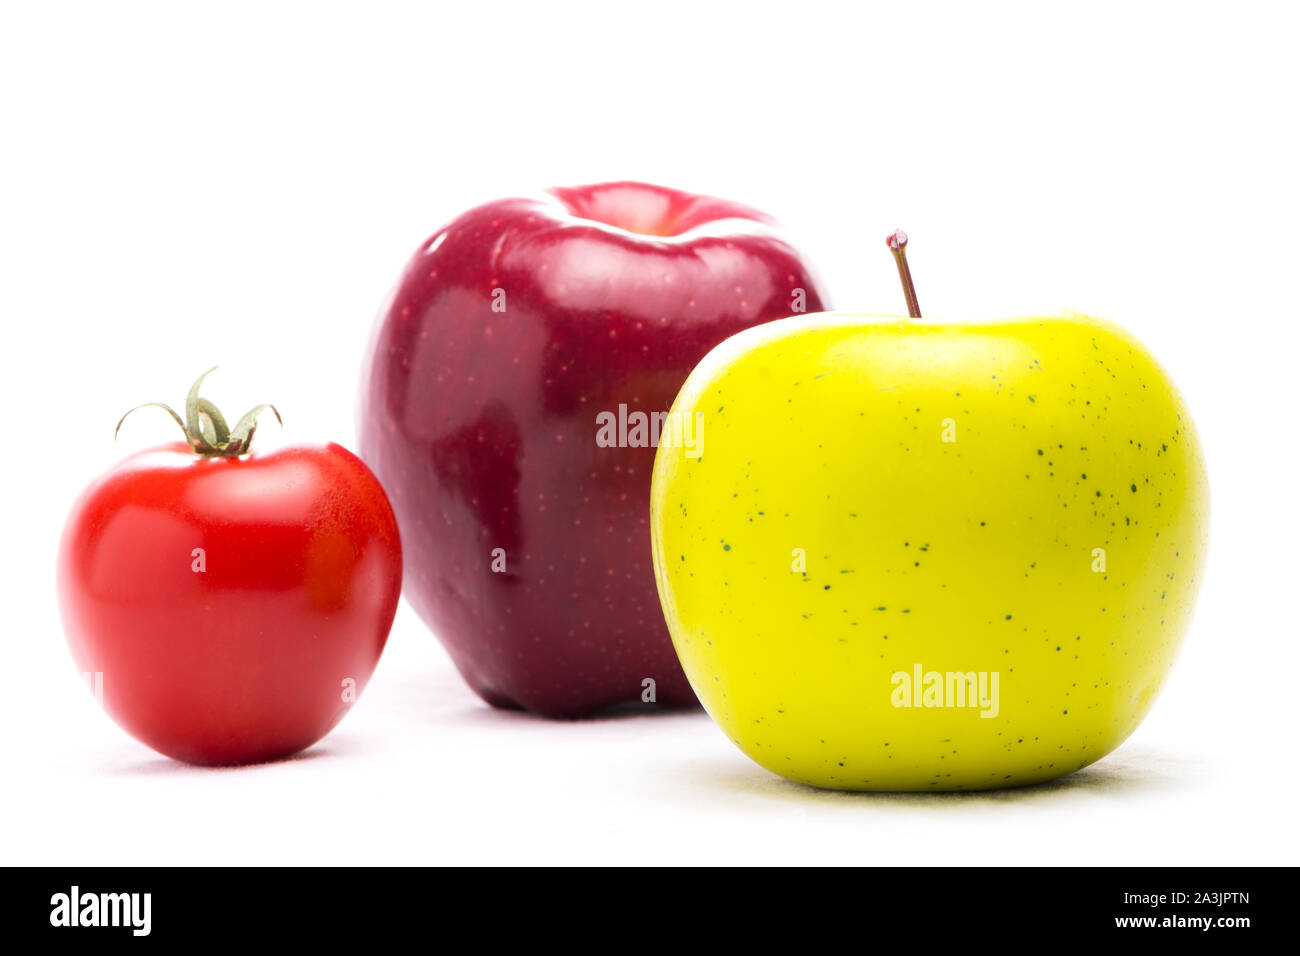 https://c8.alamy.com/comp/2A3JPTN/macintosh-apple-granny-smith-apple-and-red-tomato-fruit-composition-health-concept-2A3JPTN.jpg